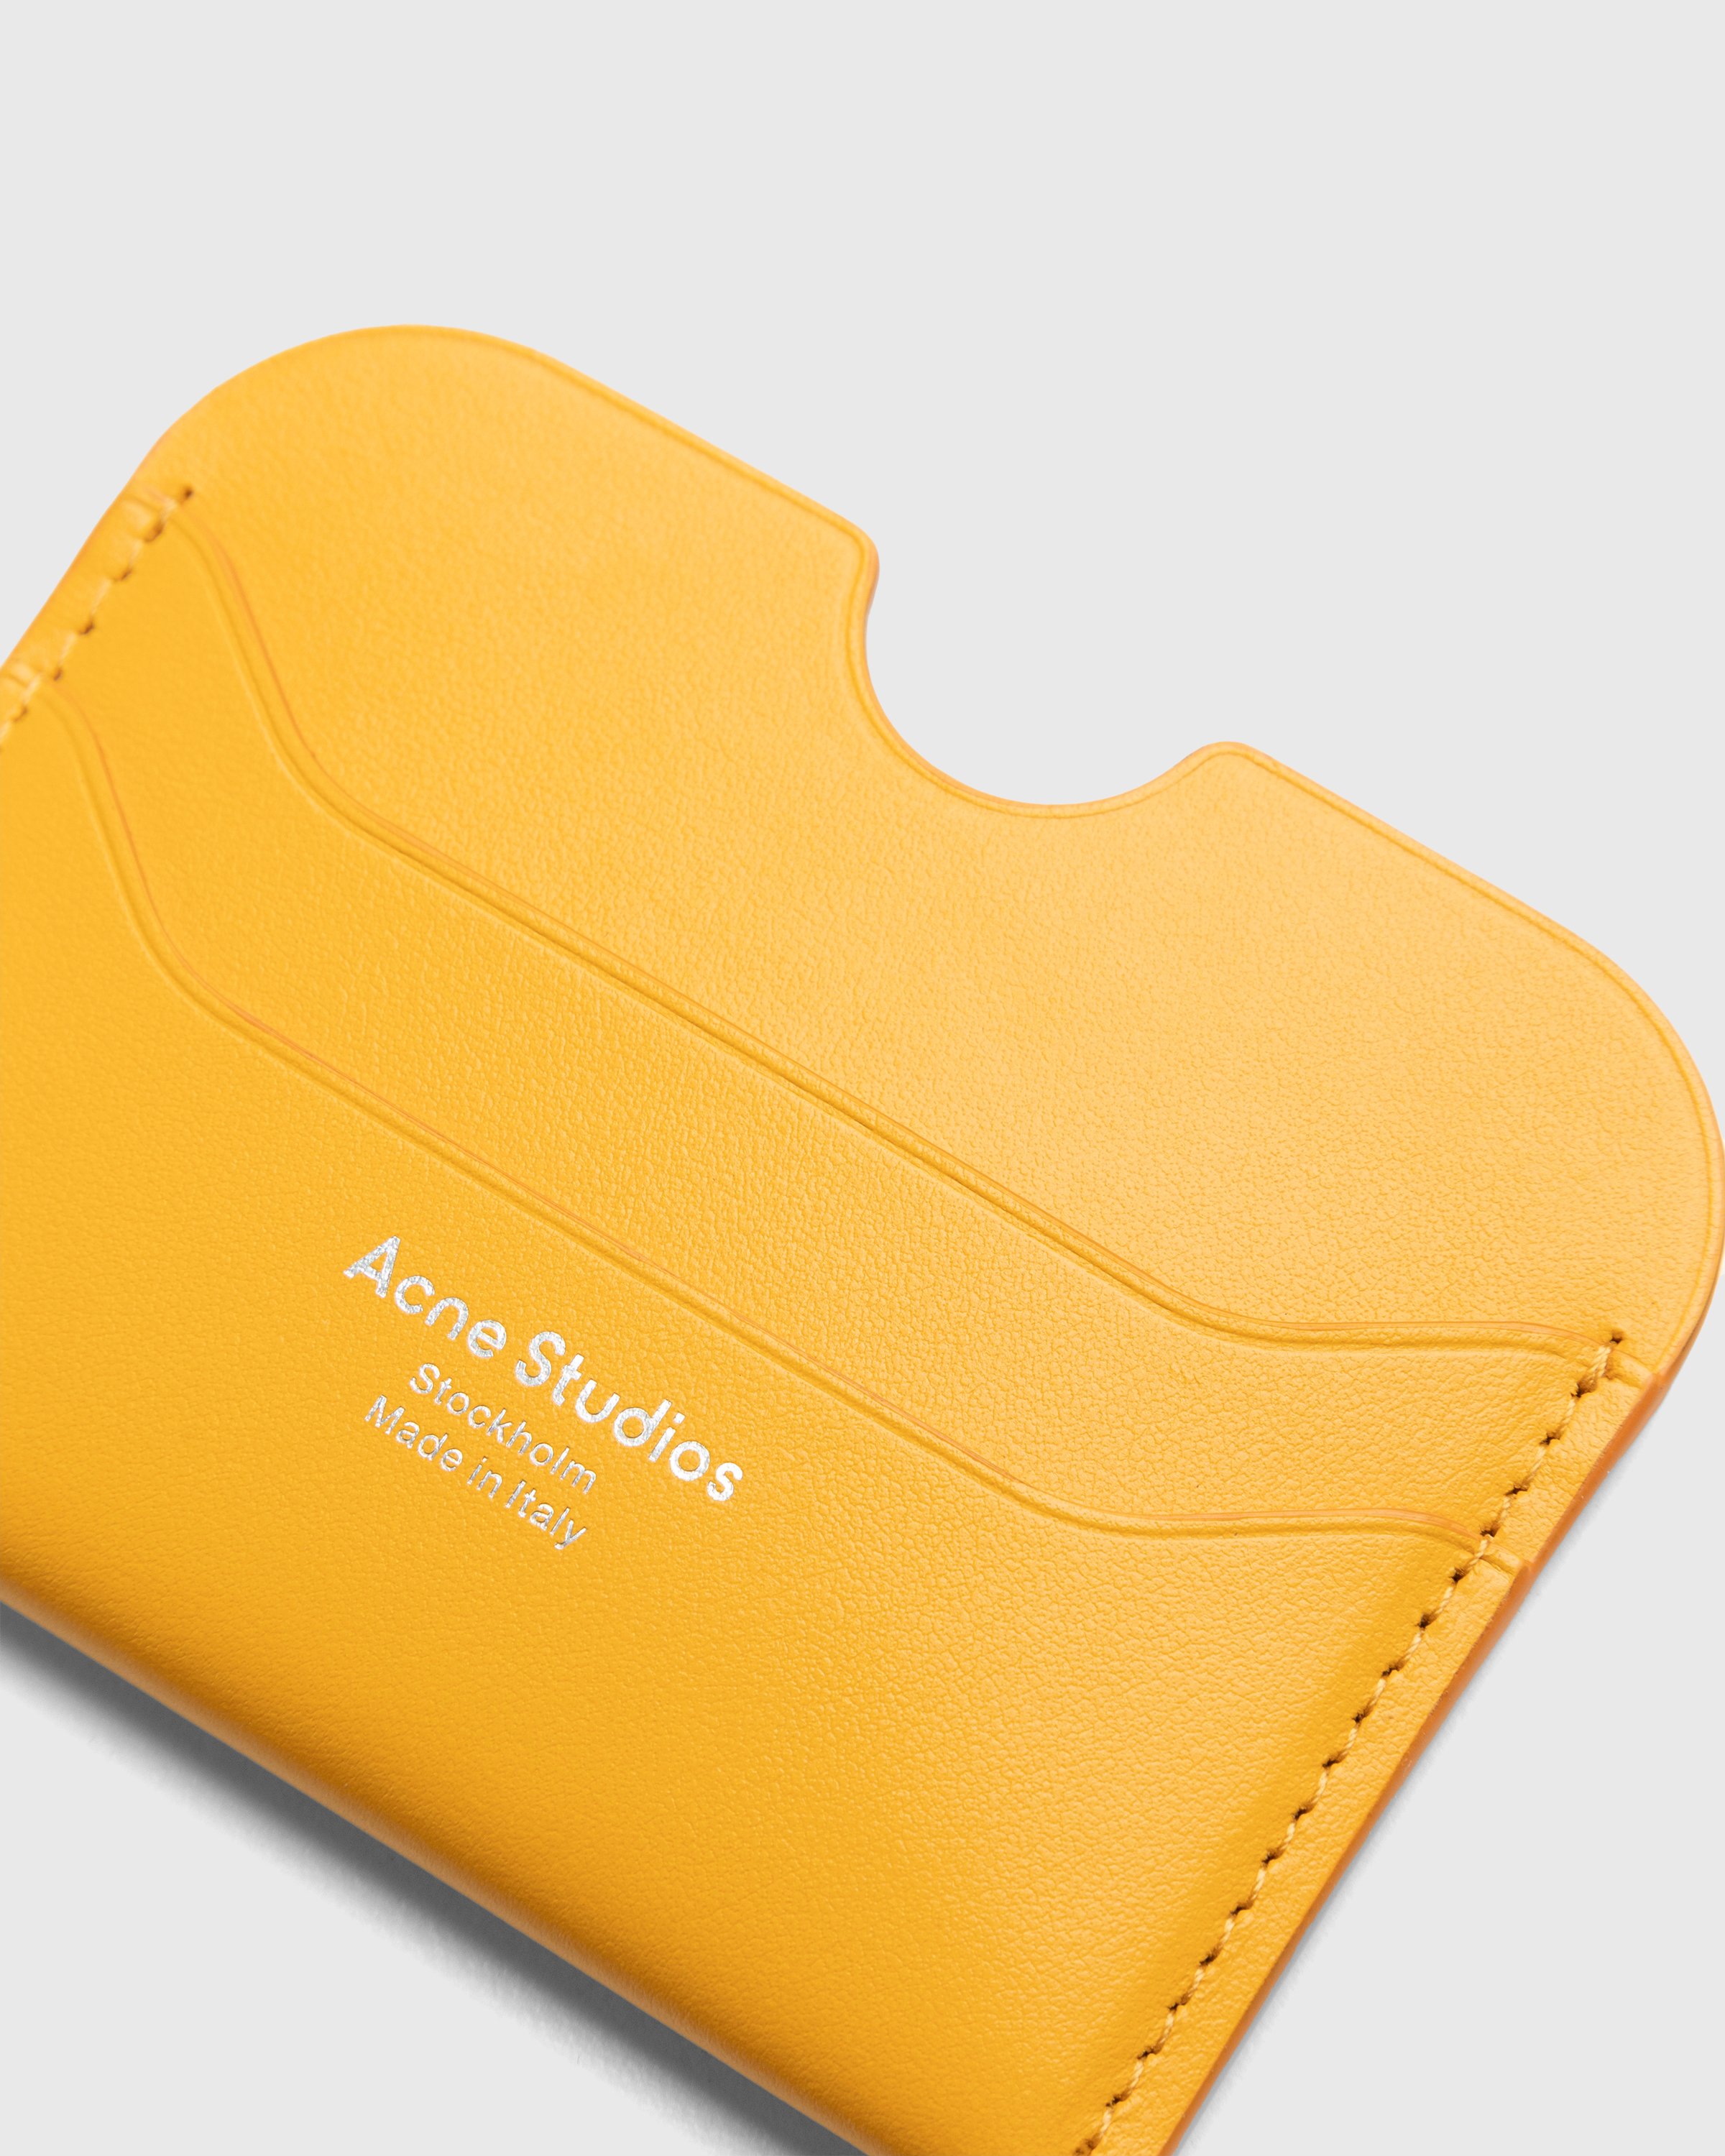 Acne Studios - Leather Card Holder Orange - Accessories - Orange - Image 3